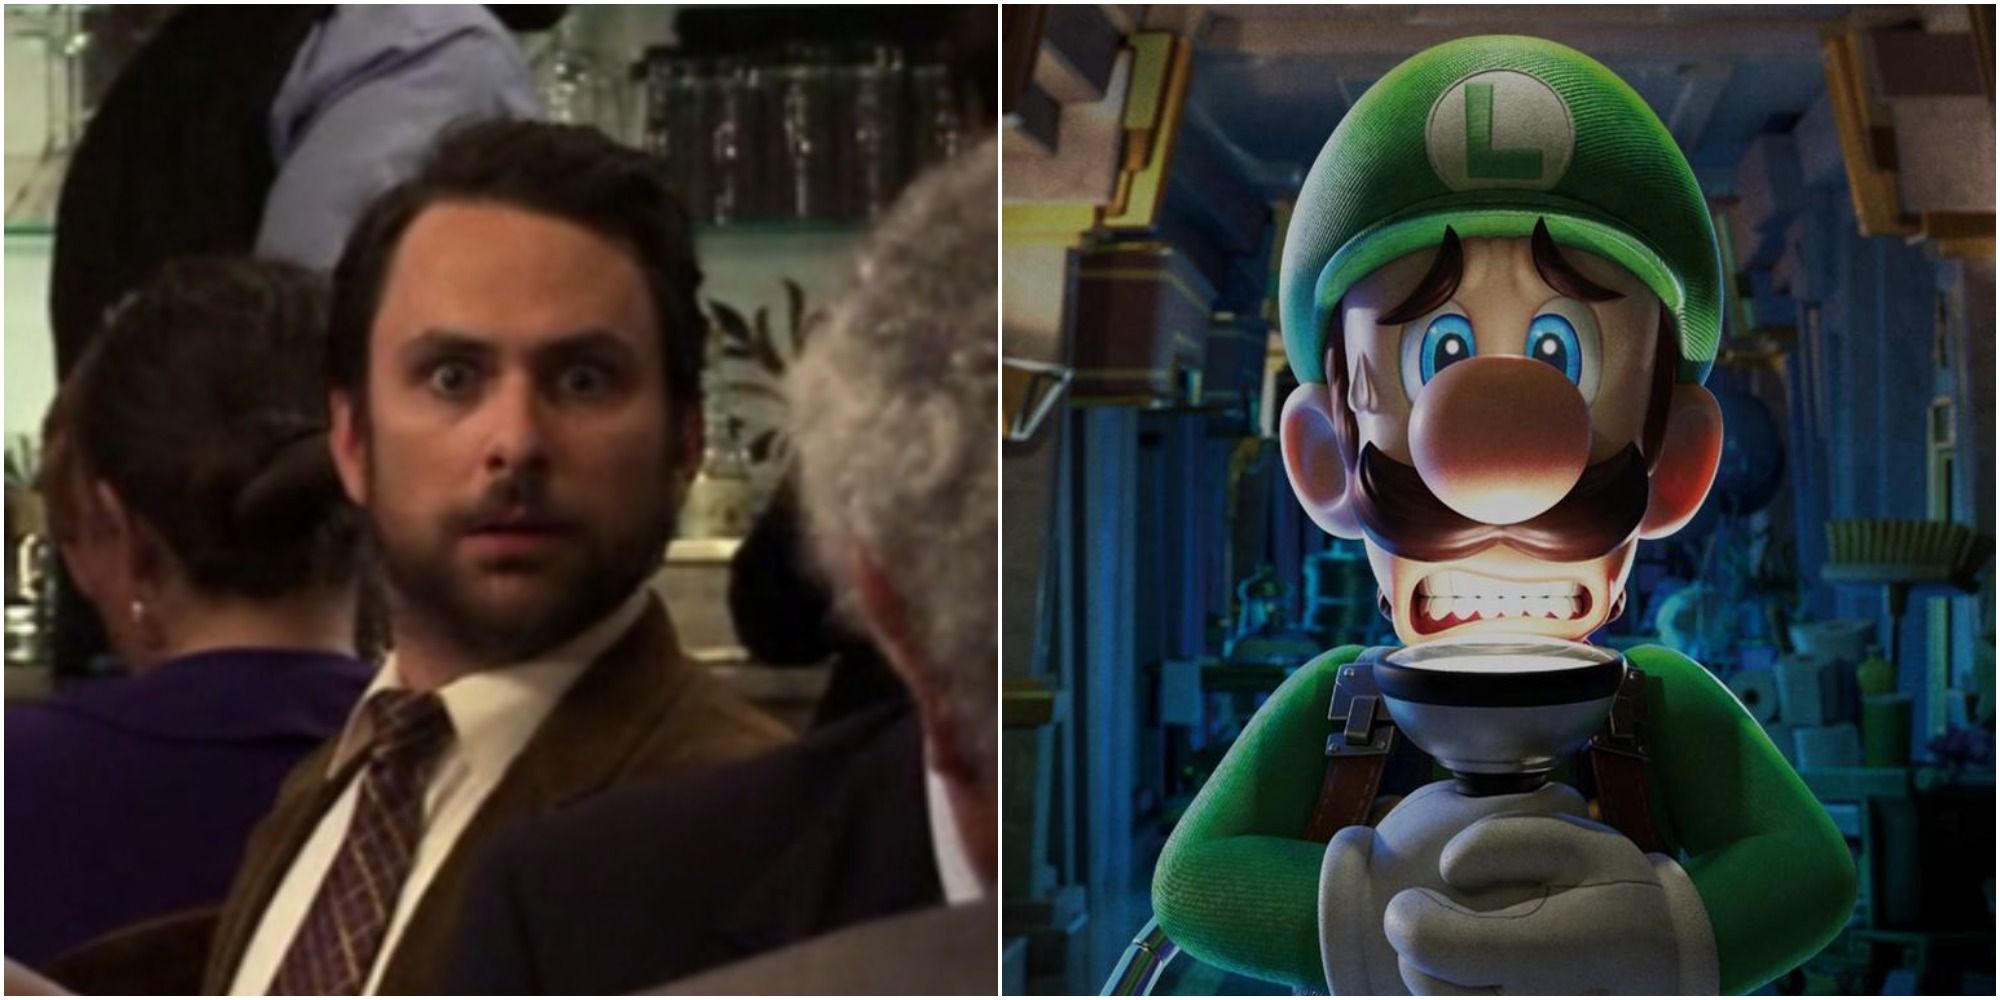 Charlie Day as Luigi 